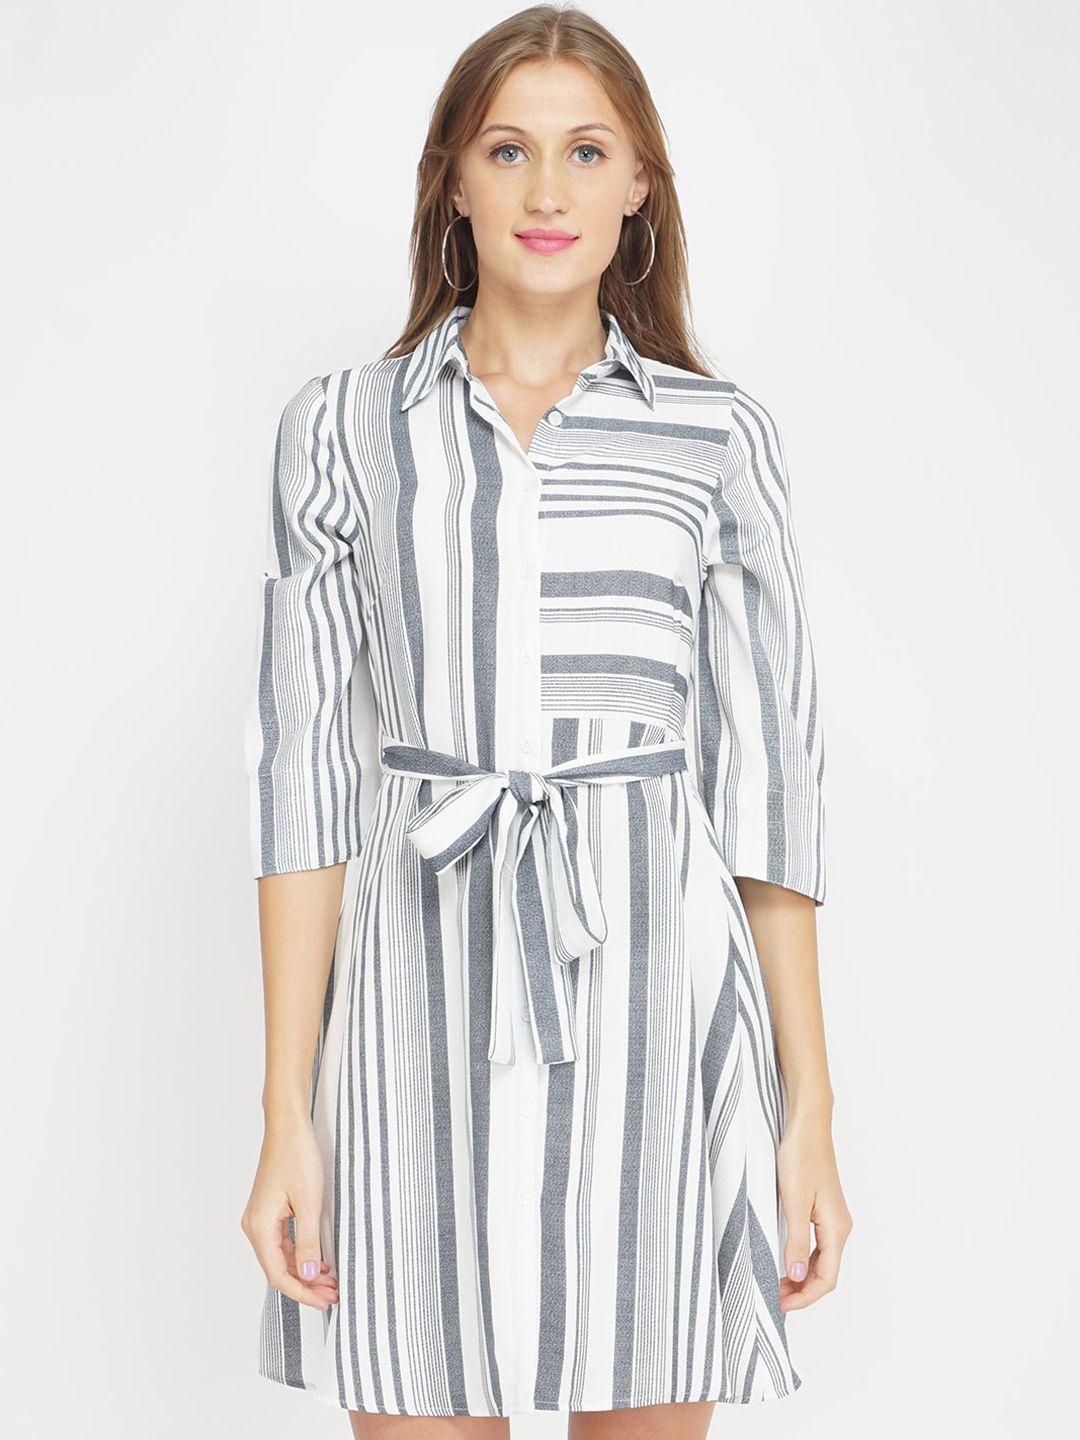 oxolloxo women white & grey striped crepe shirt dress